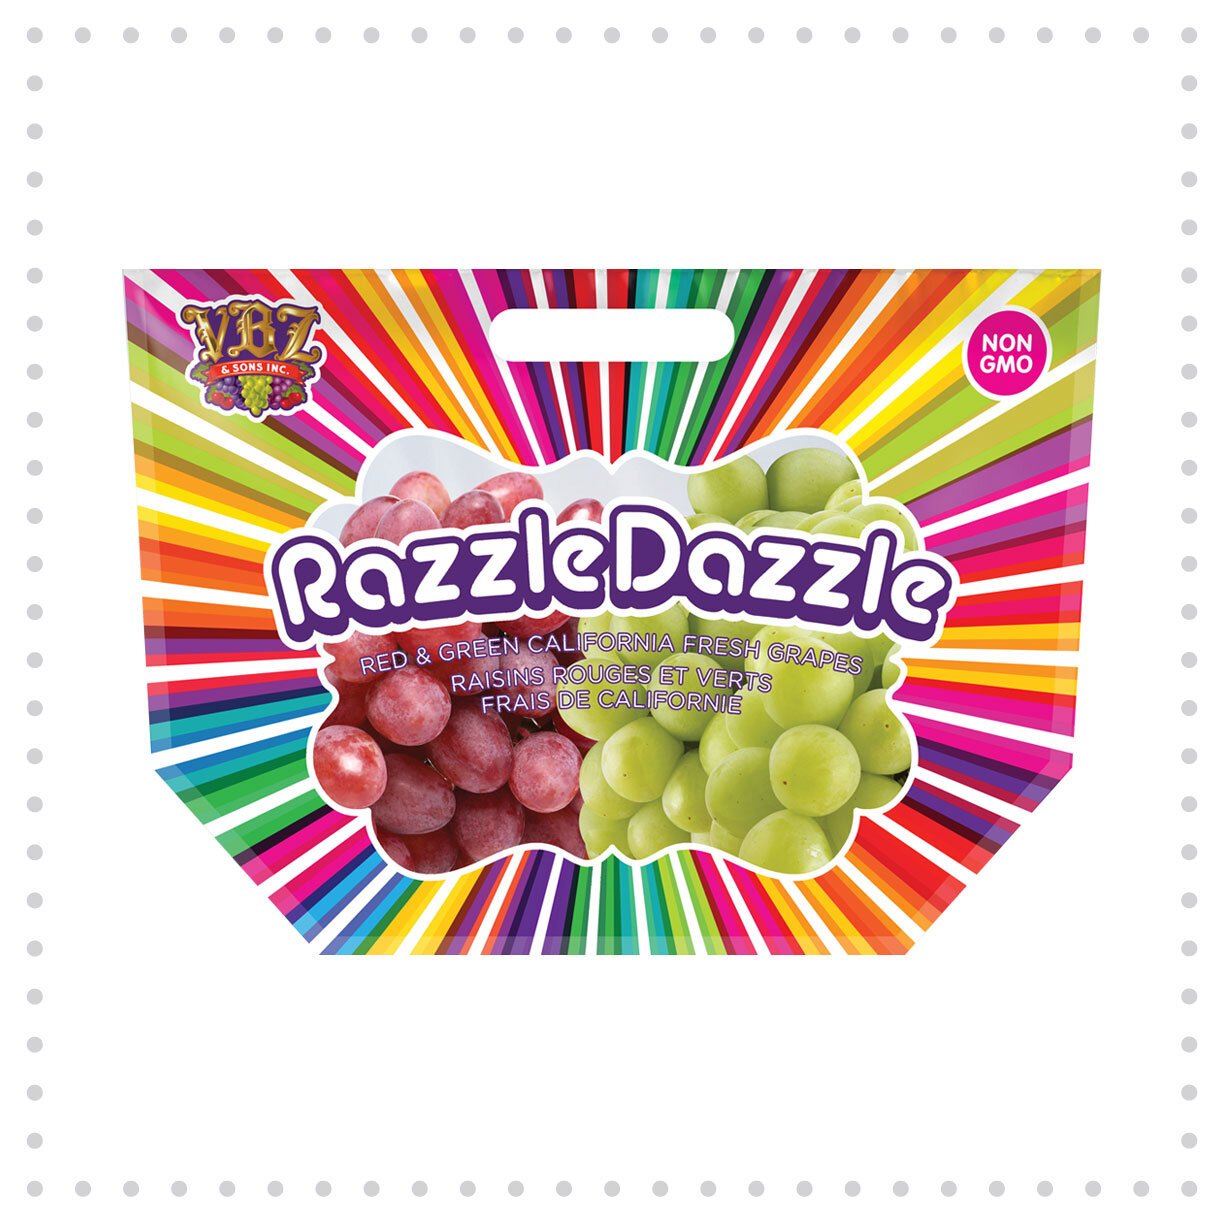 Ball-PouchBagDesign-RazzleDazzleGrapes.jpg